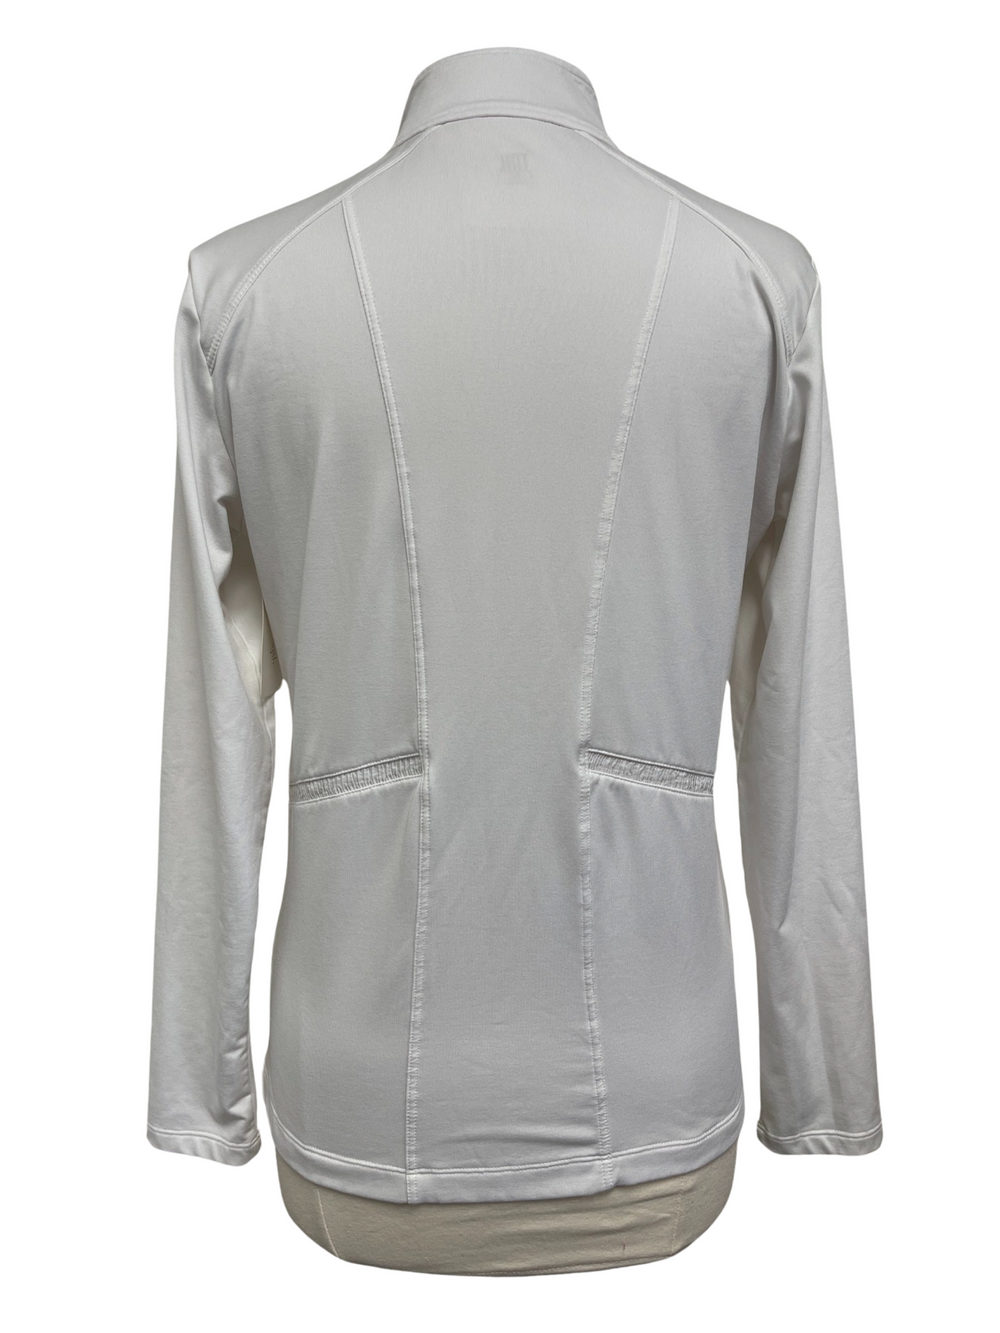 Tail Jacket - White - Medium - Skorzie